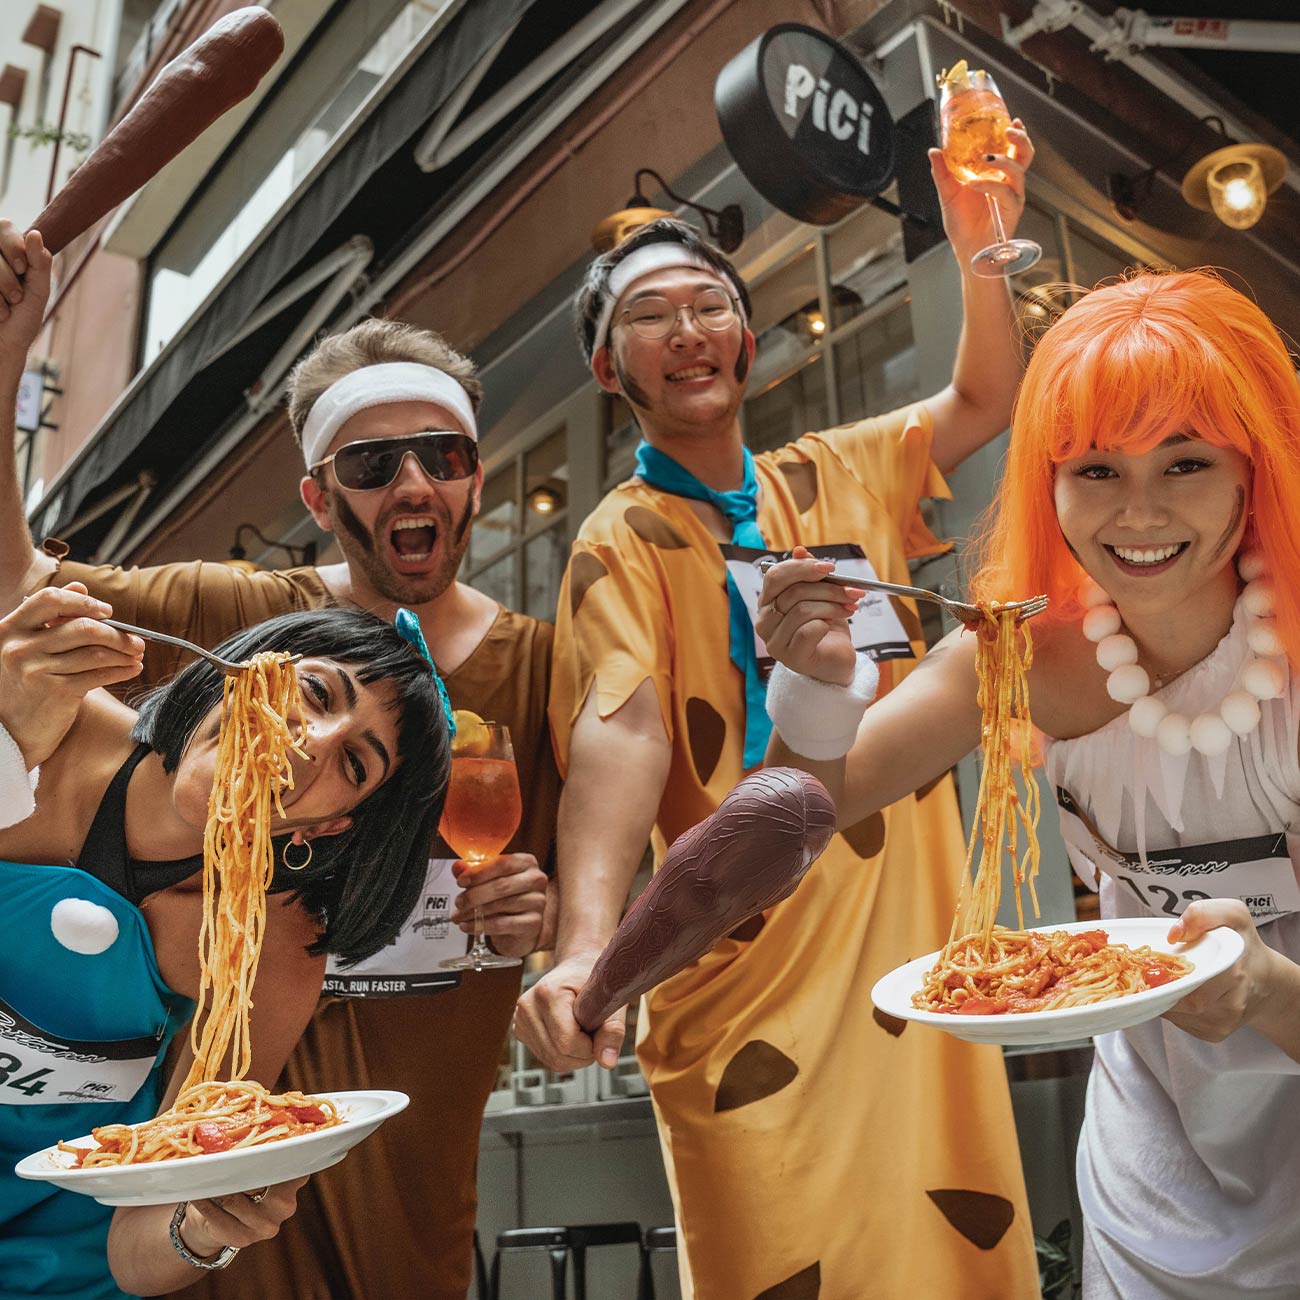 A team participating in the Pici Pasta Run